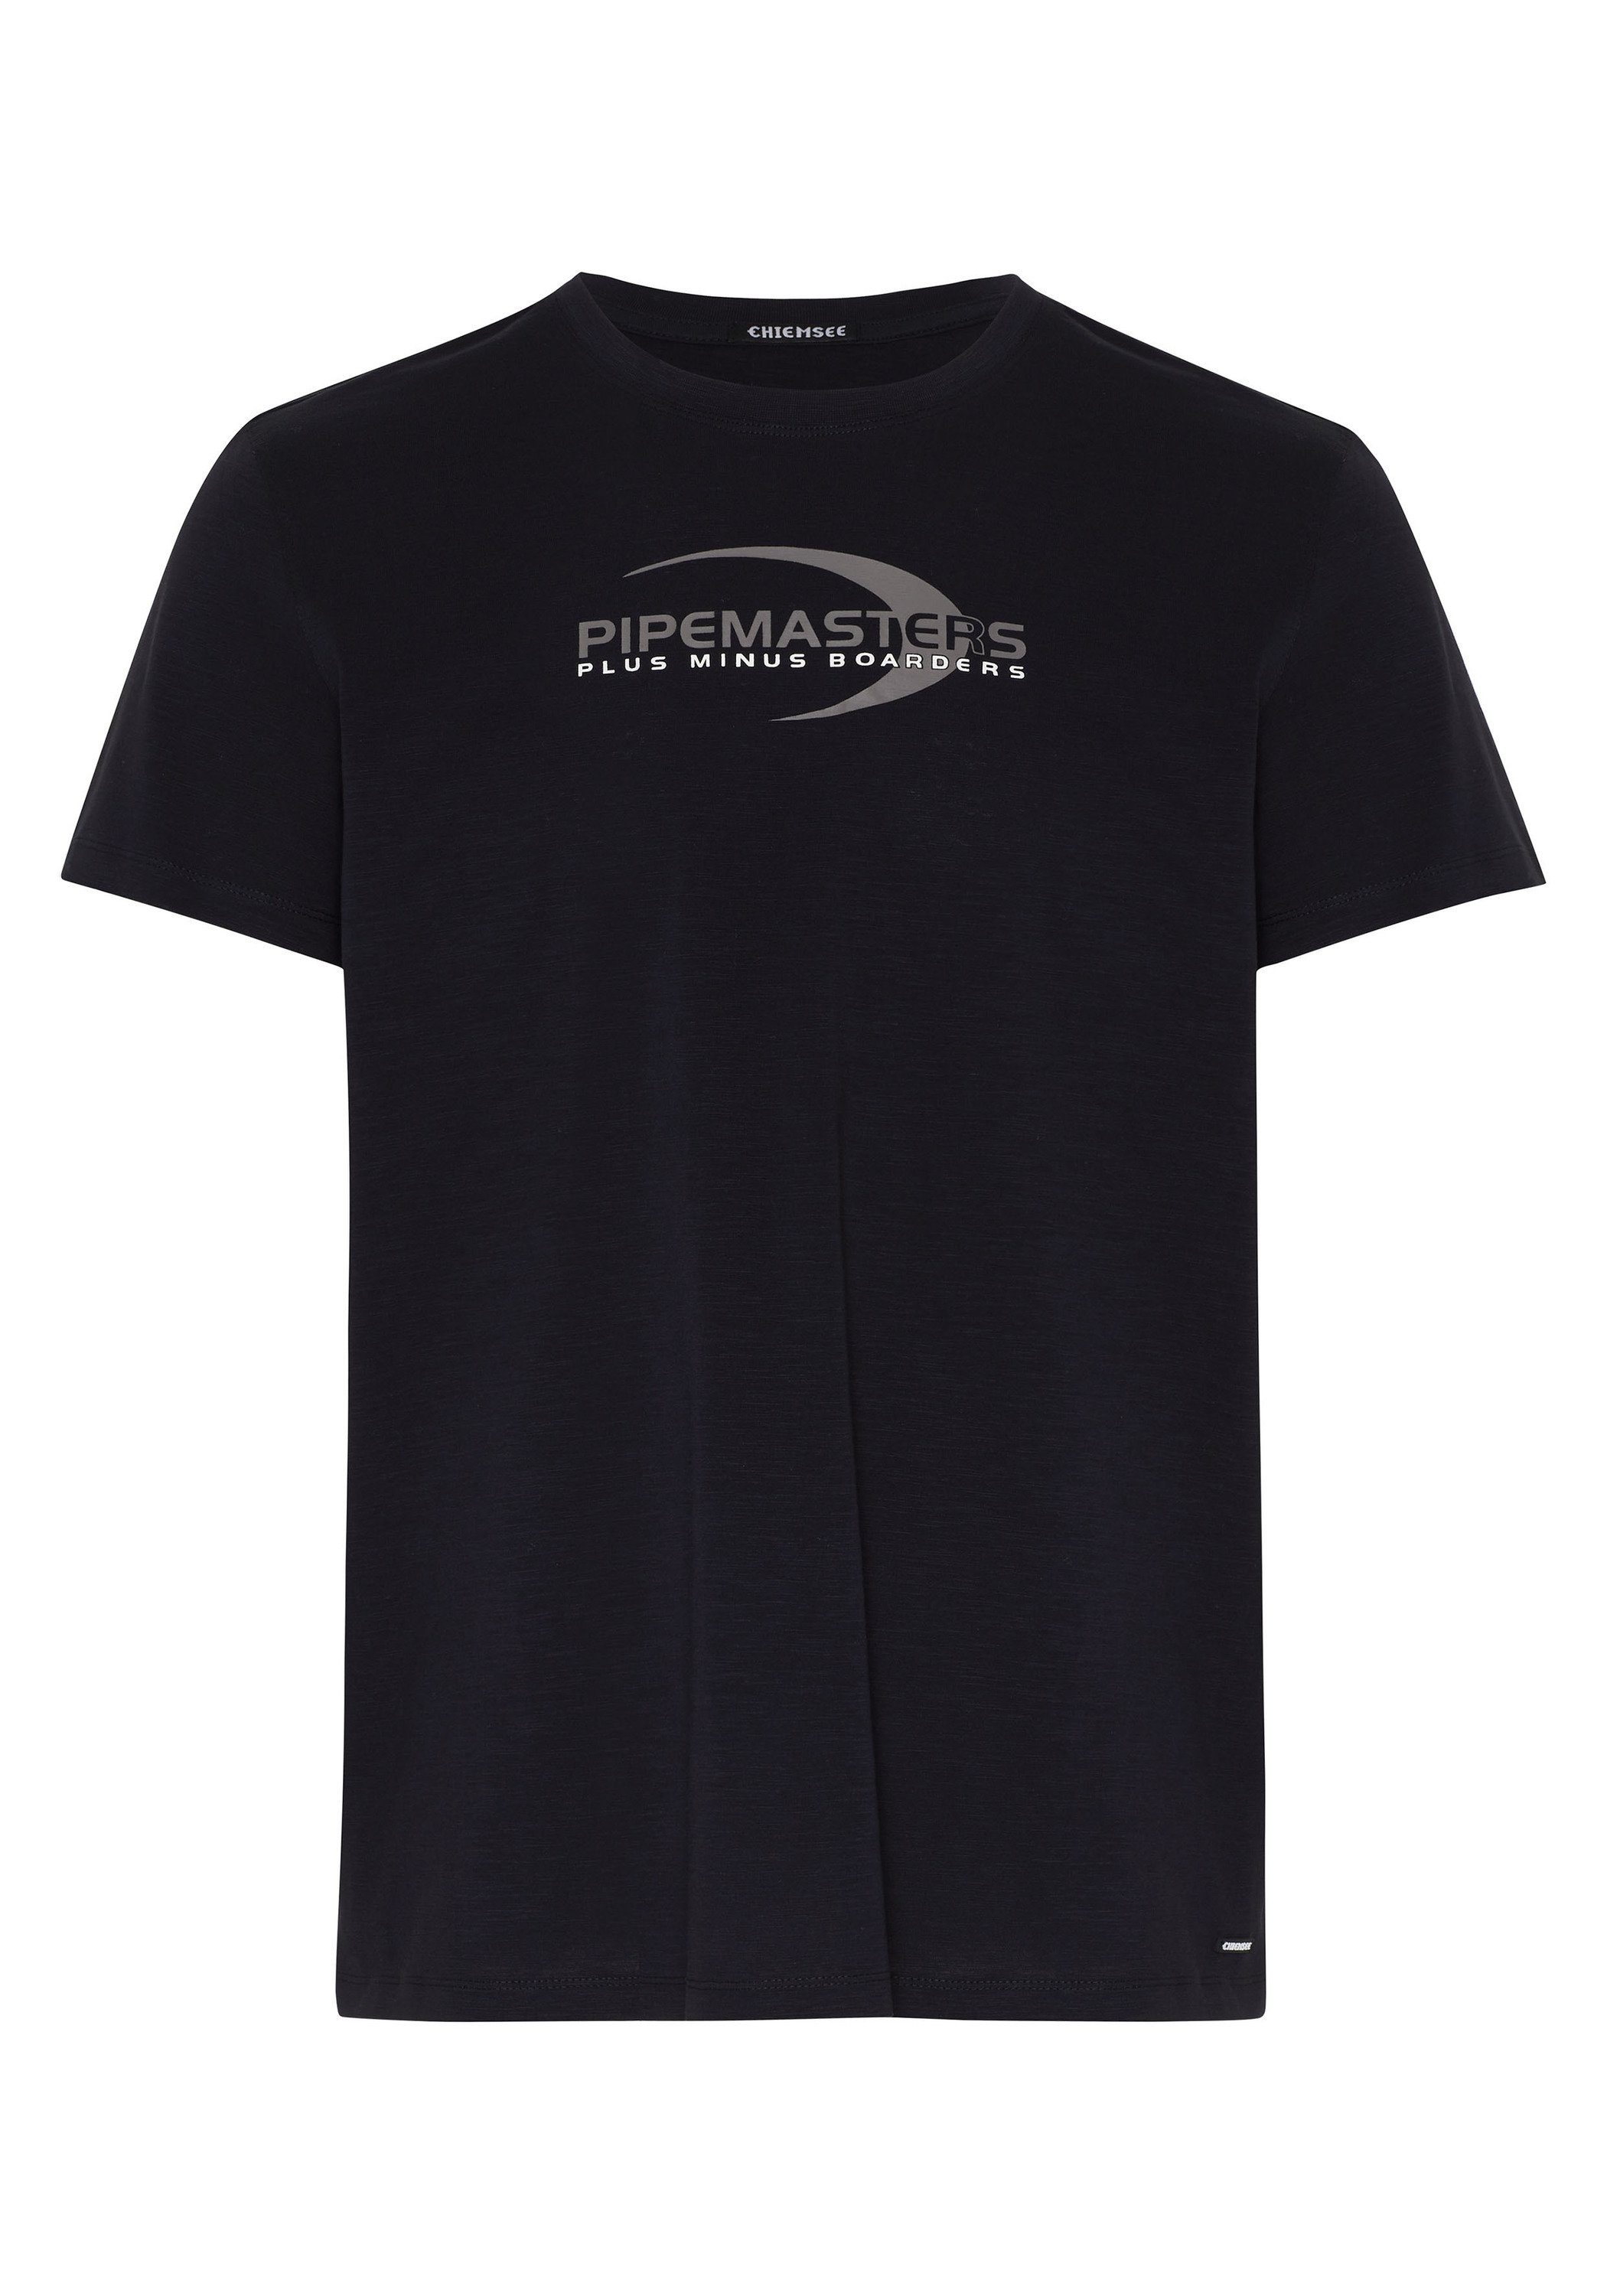 Chiemsee Print-Shirt T-Shirt mit PIPEMASTERS-Print 1